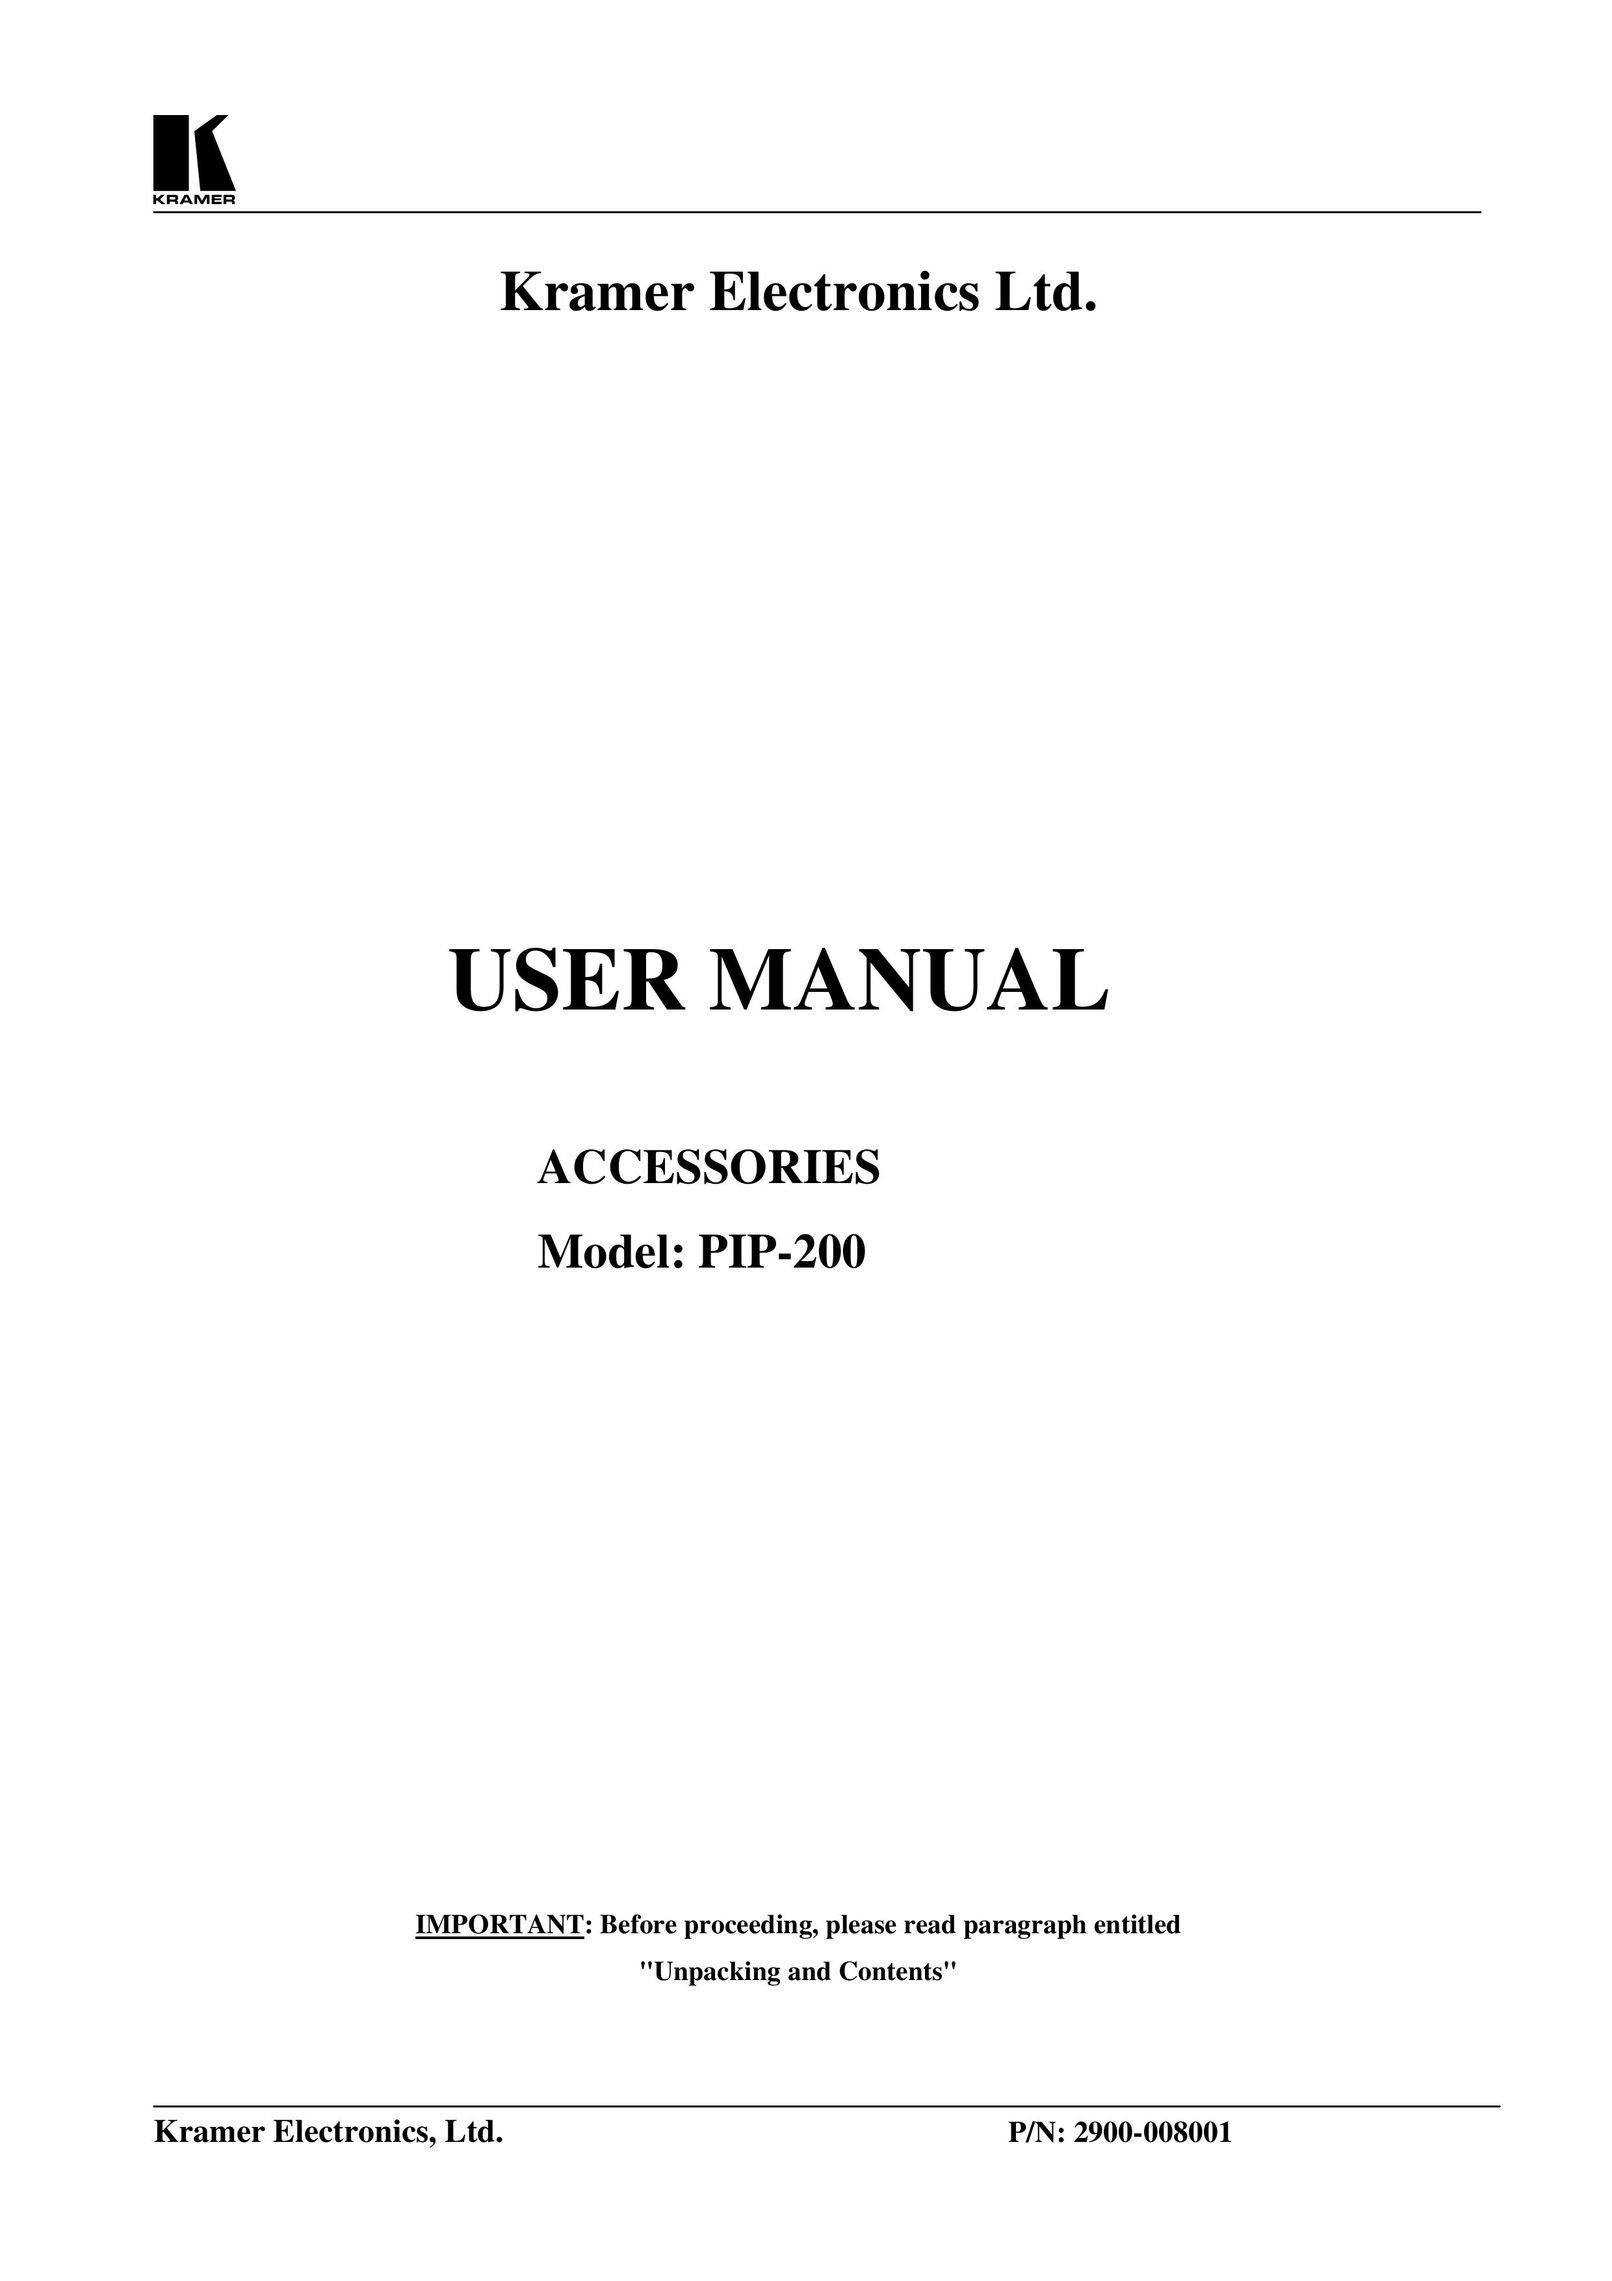 Kramer Electronics PIP-200 Electronic Accessory User Manual